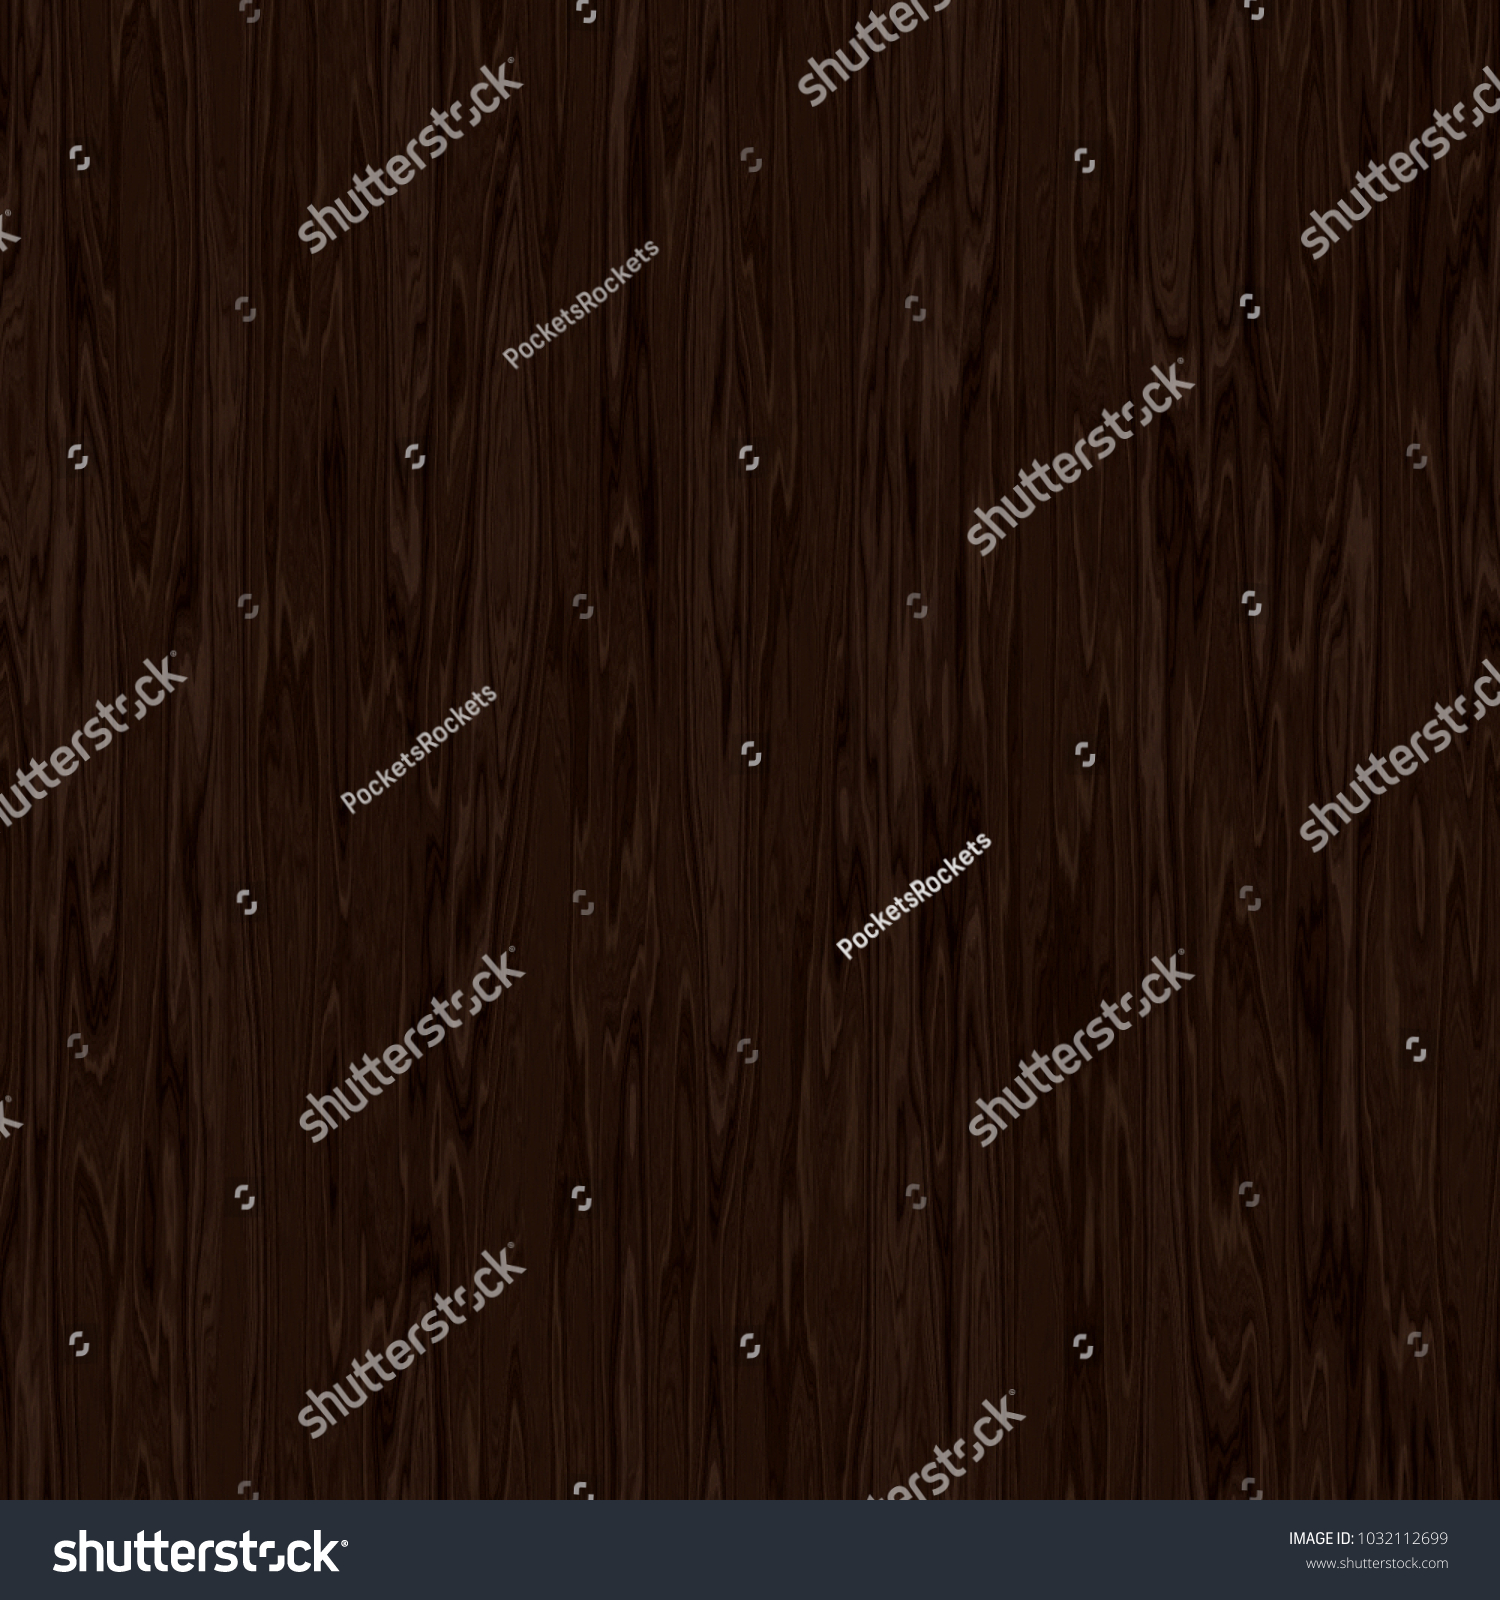 Seamless wood texture #1032112699